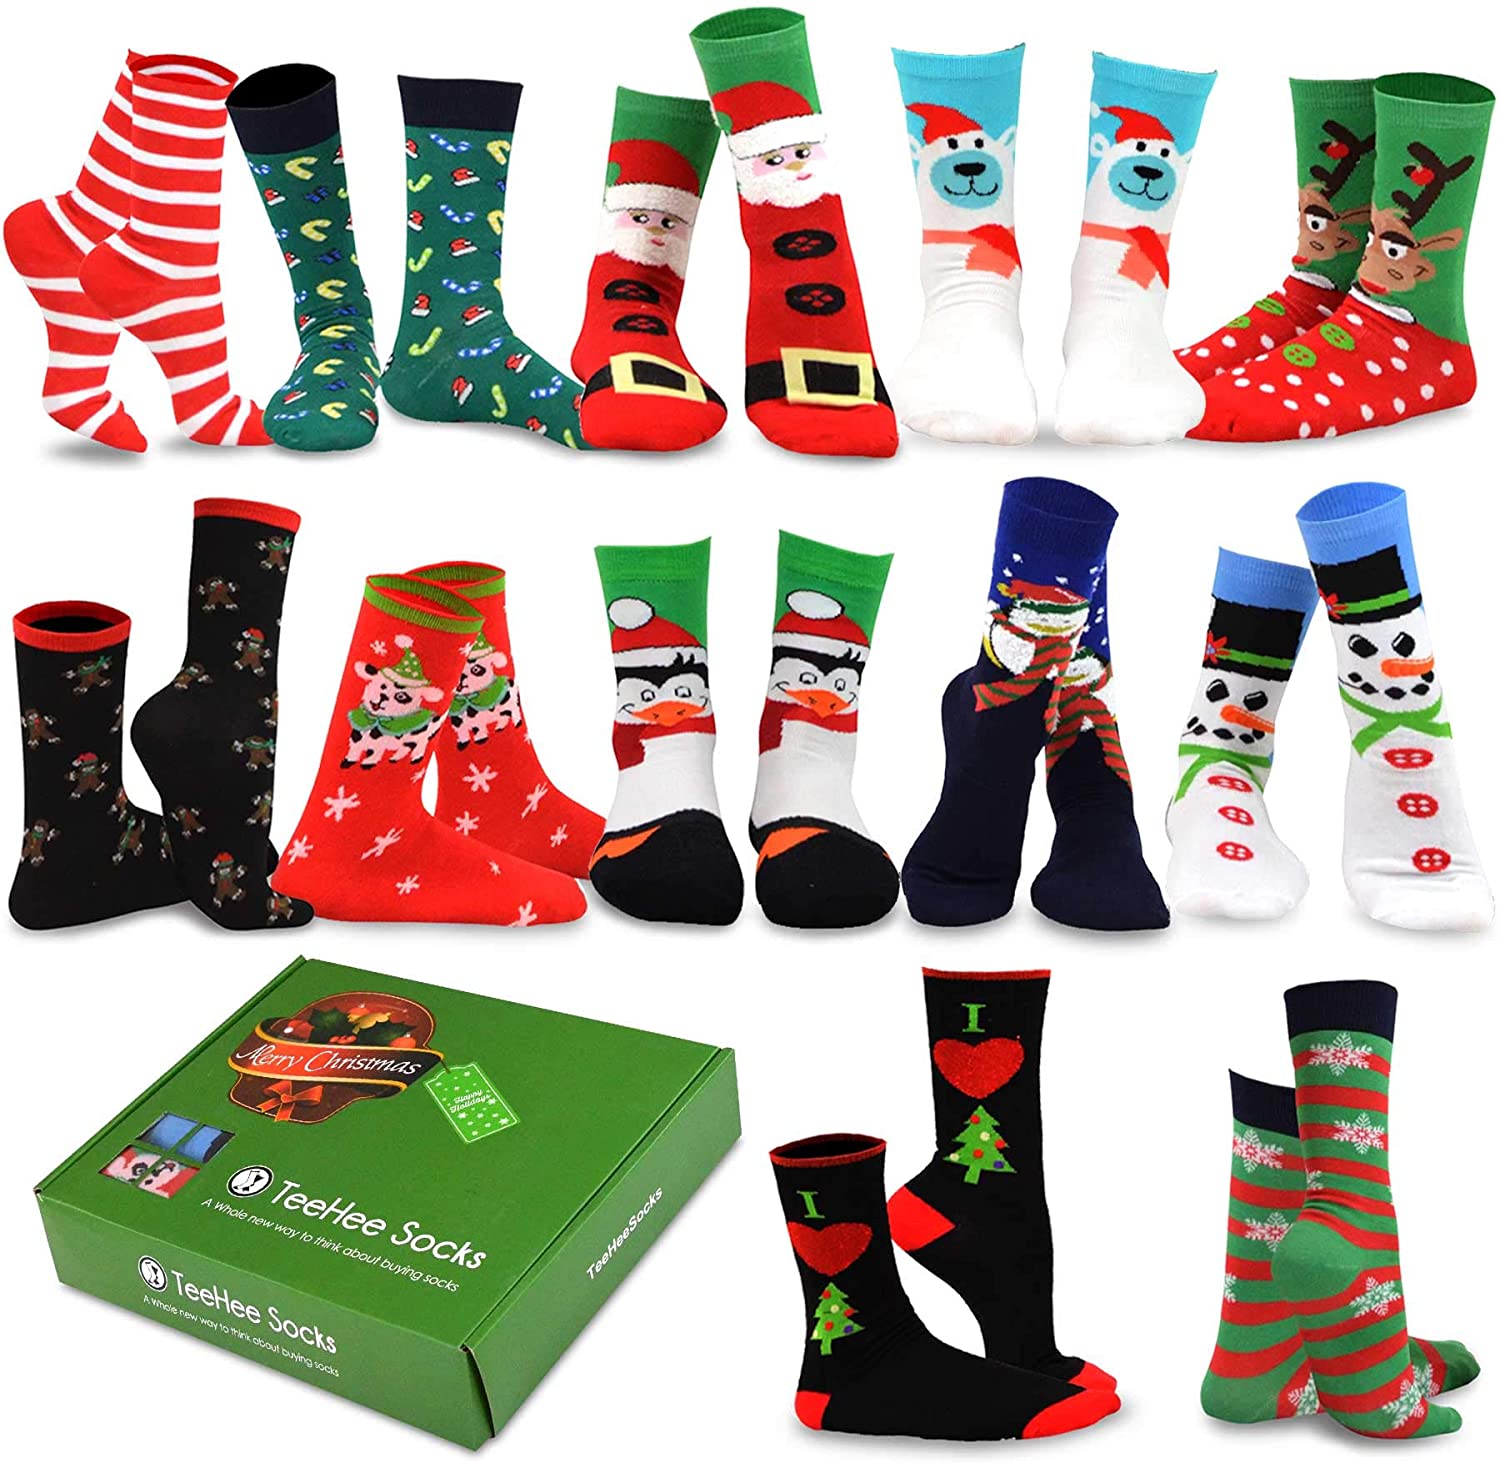  TeeHee Seasonal Holiday Socks, 12-Pair with Gift Box